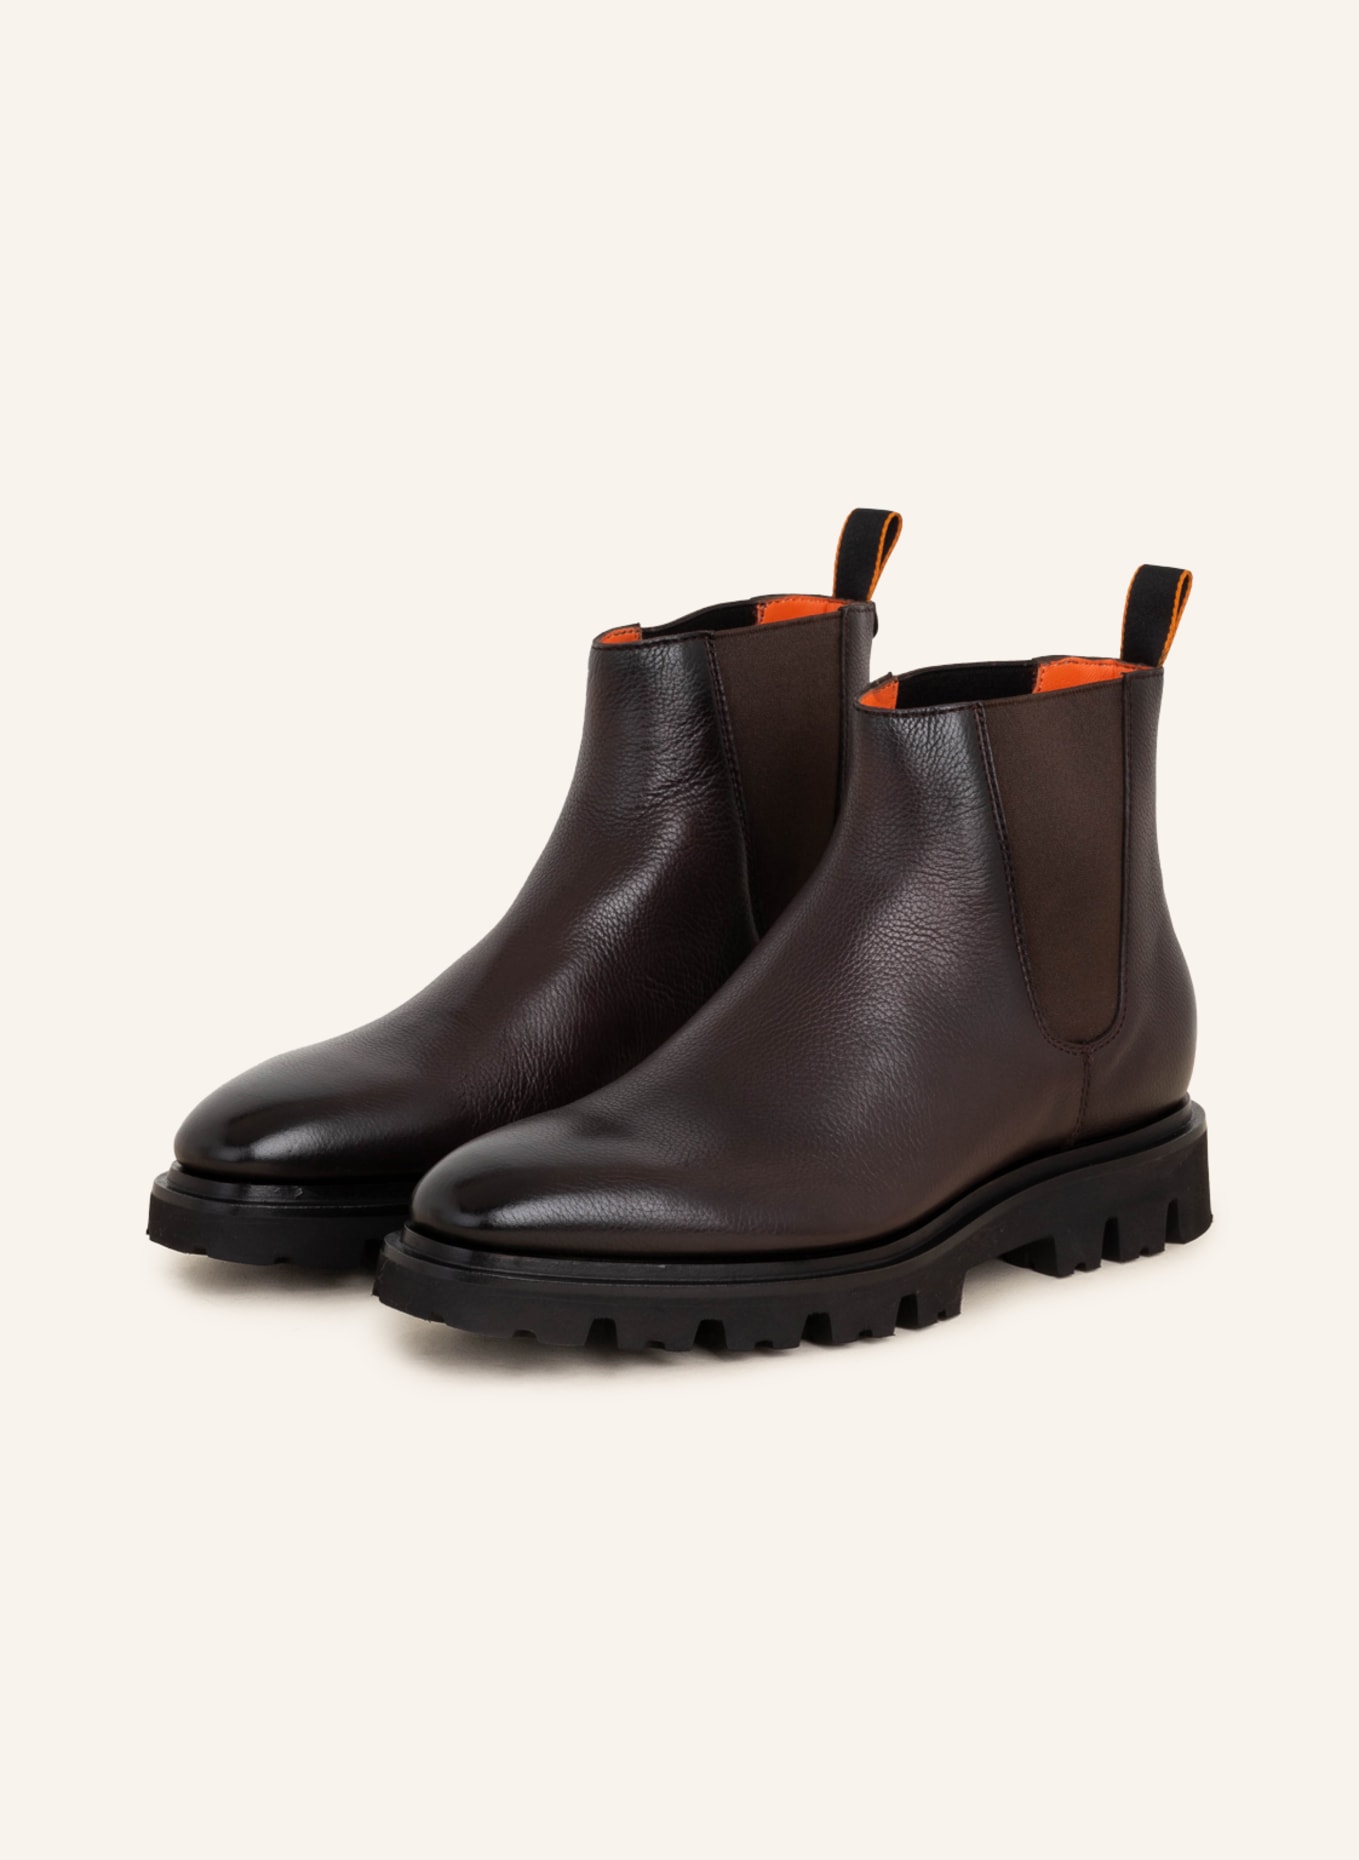 Santoni boots in brown | Breuninger